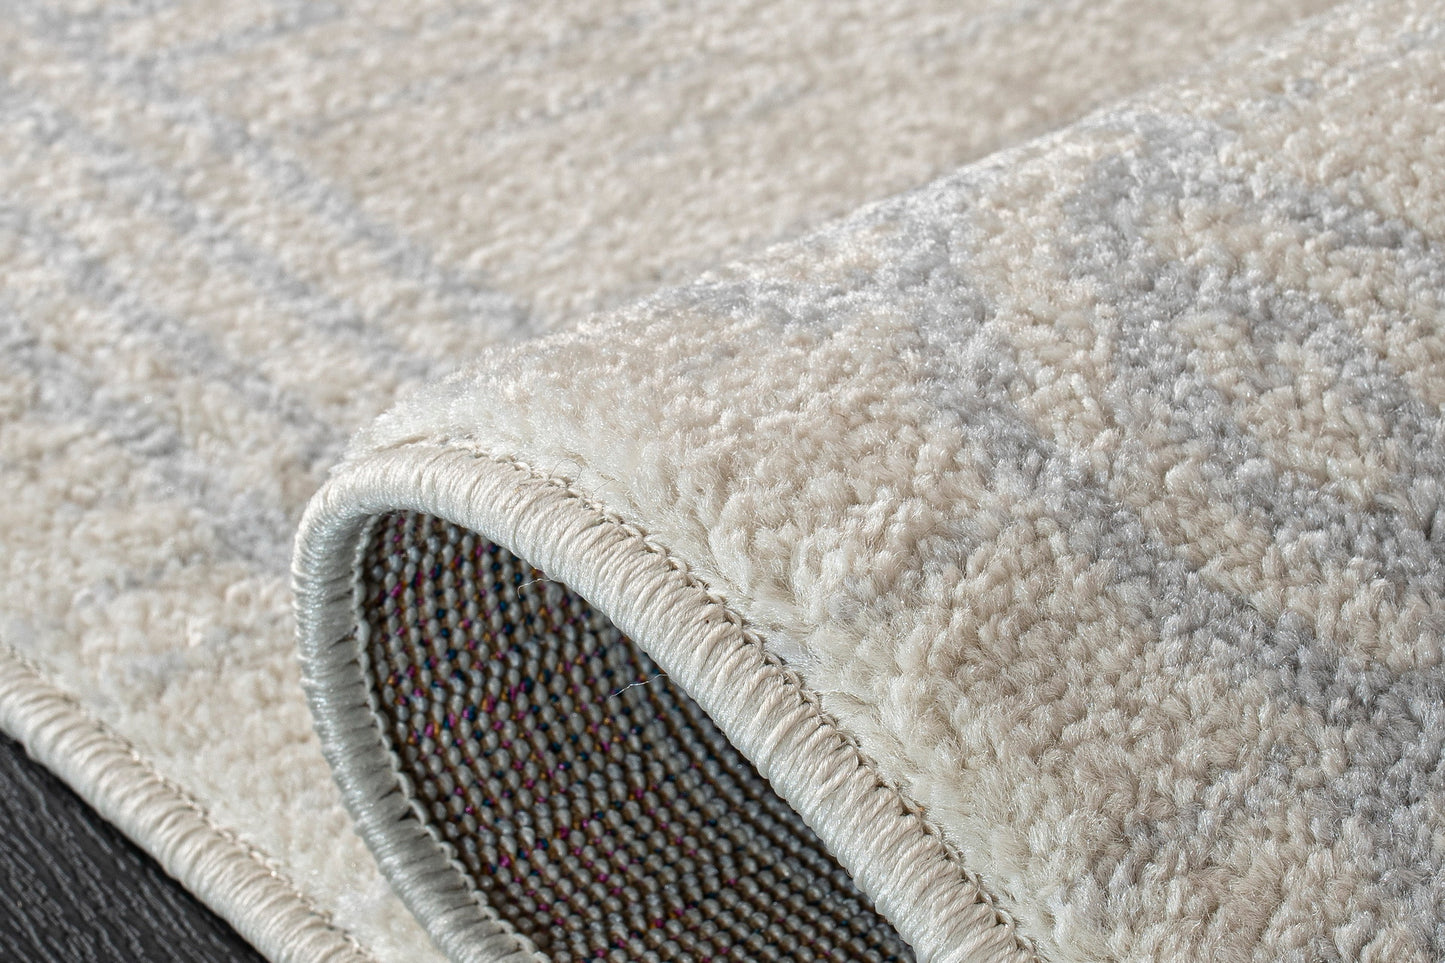 Modern Ivory Grey Bordered Area rug